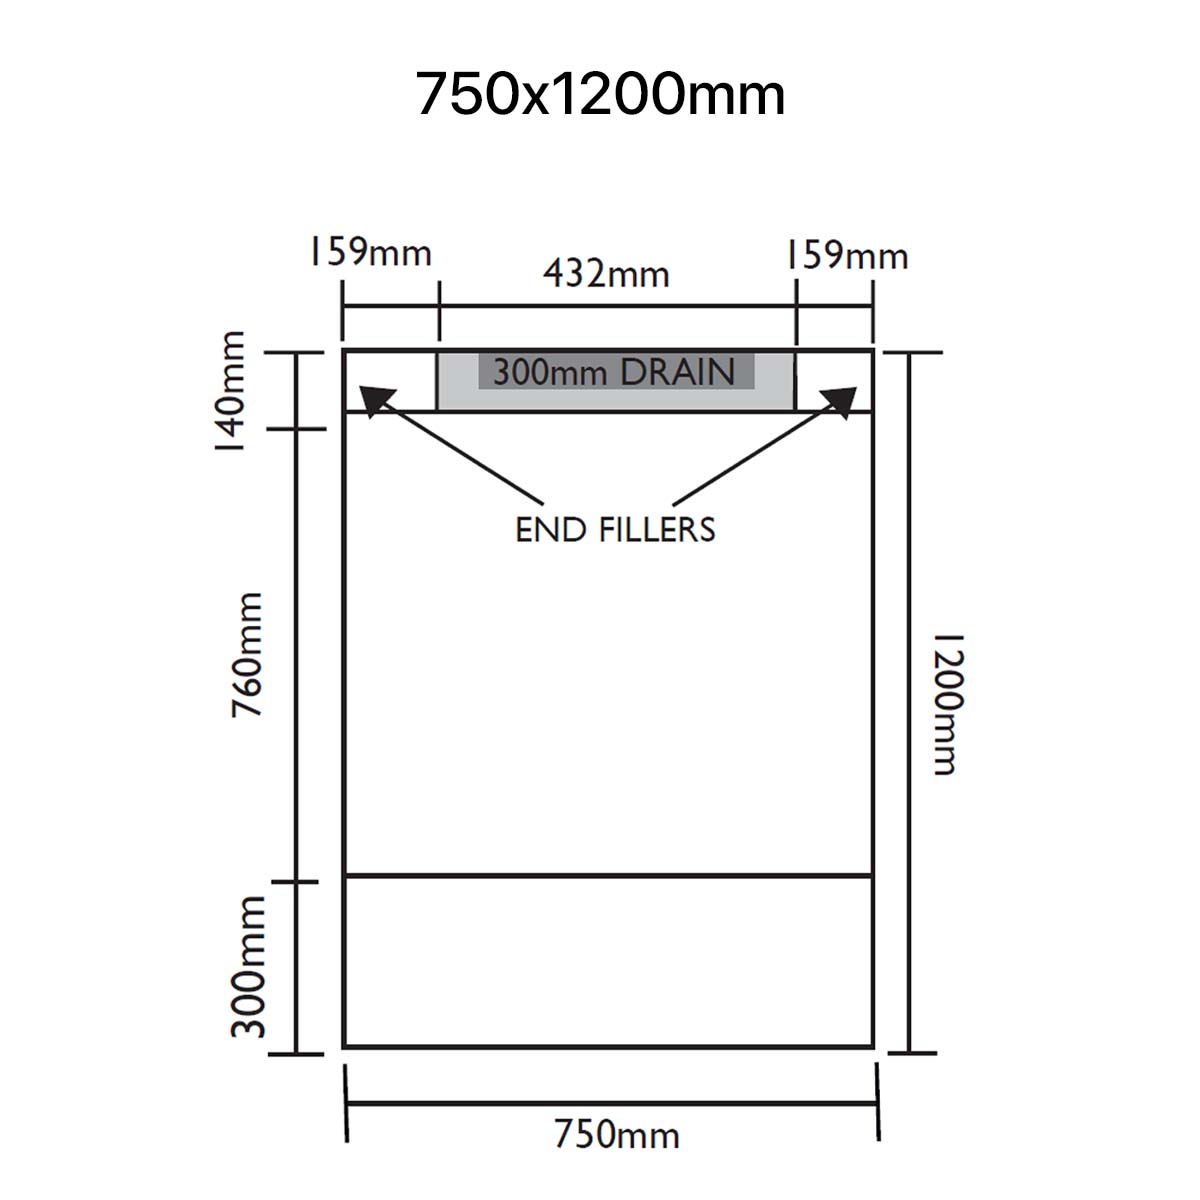 Unislope 1K linear drain 750x1200mm dimensions